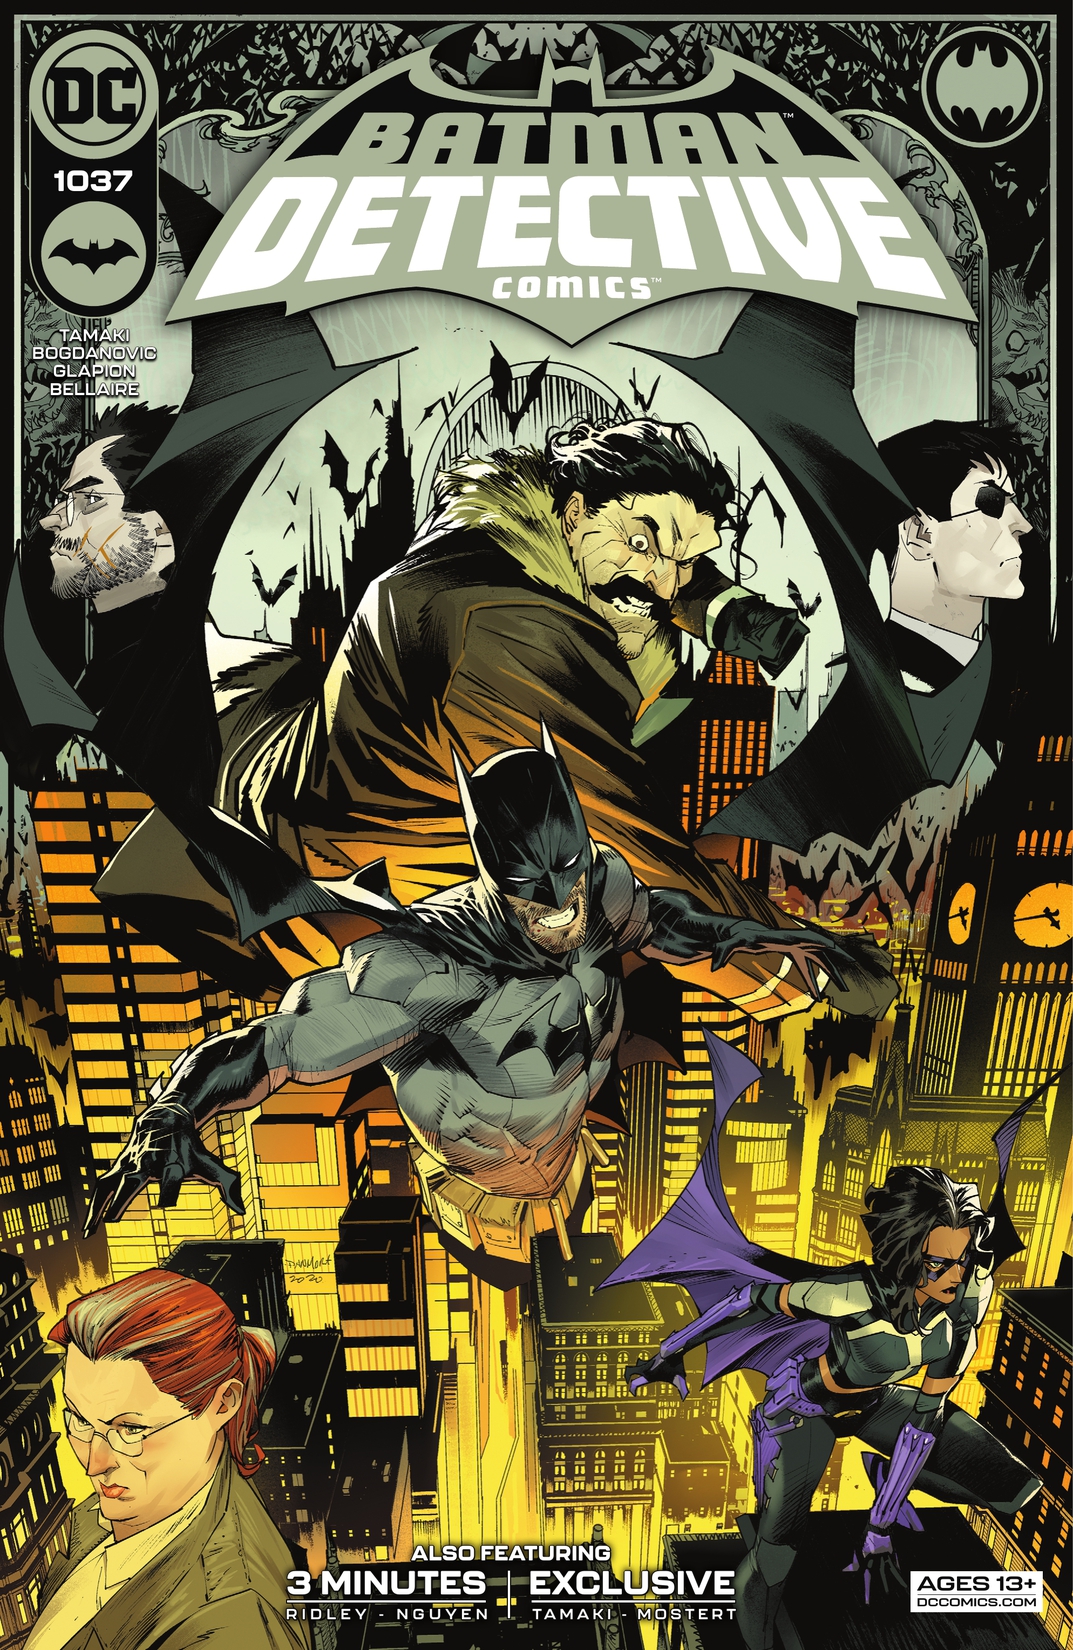 Detective Comics (2016-) #1037 preview images